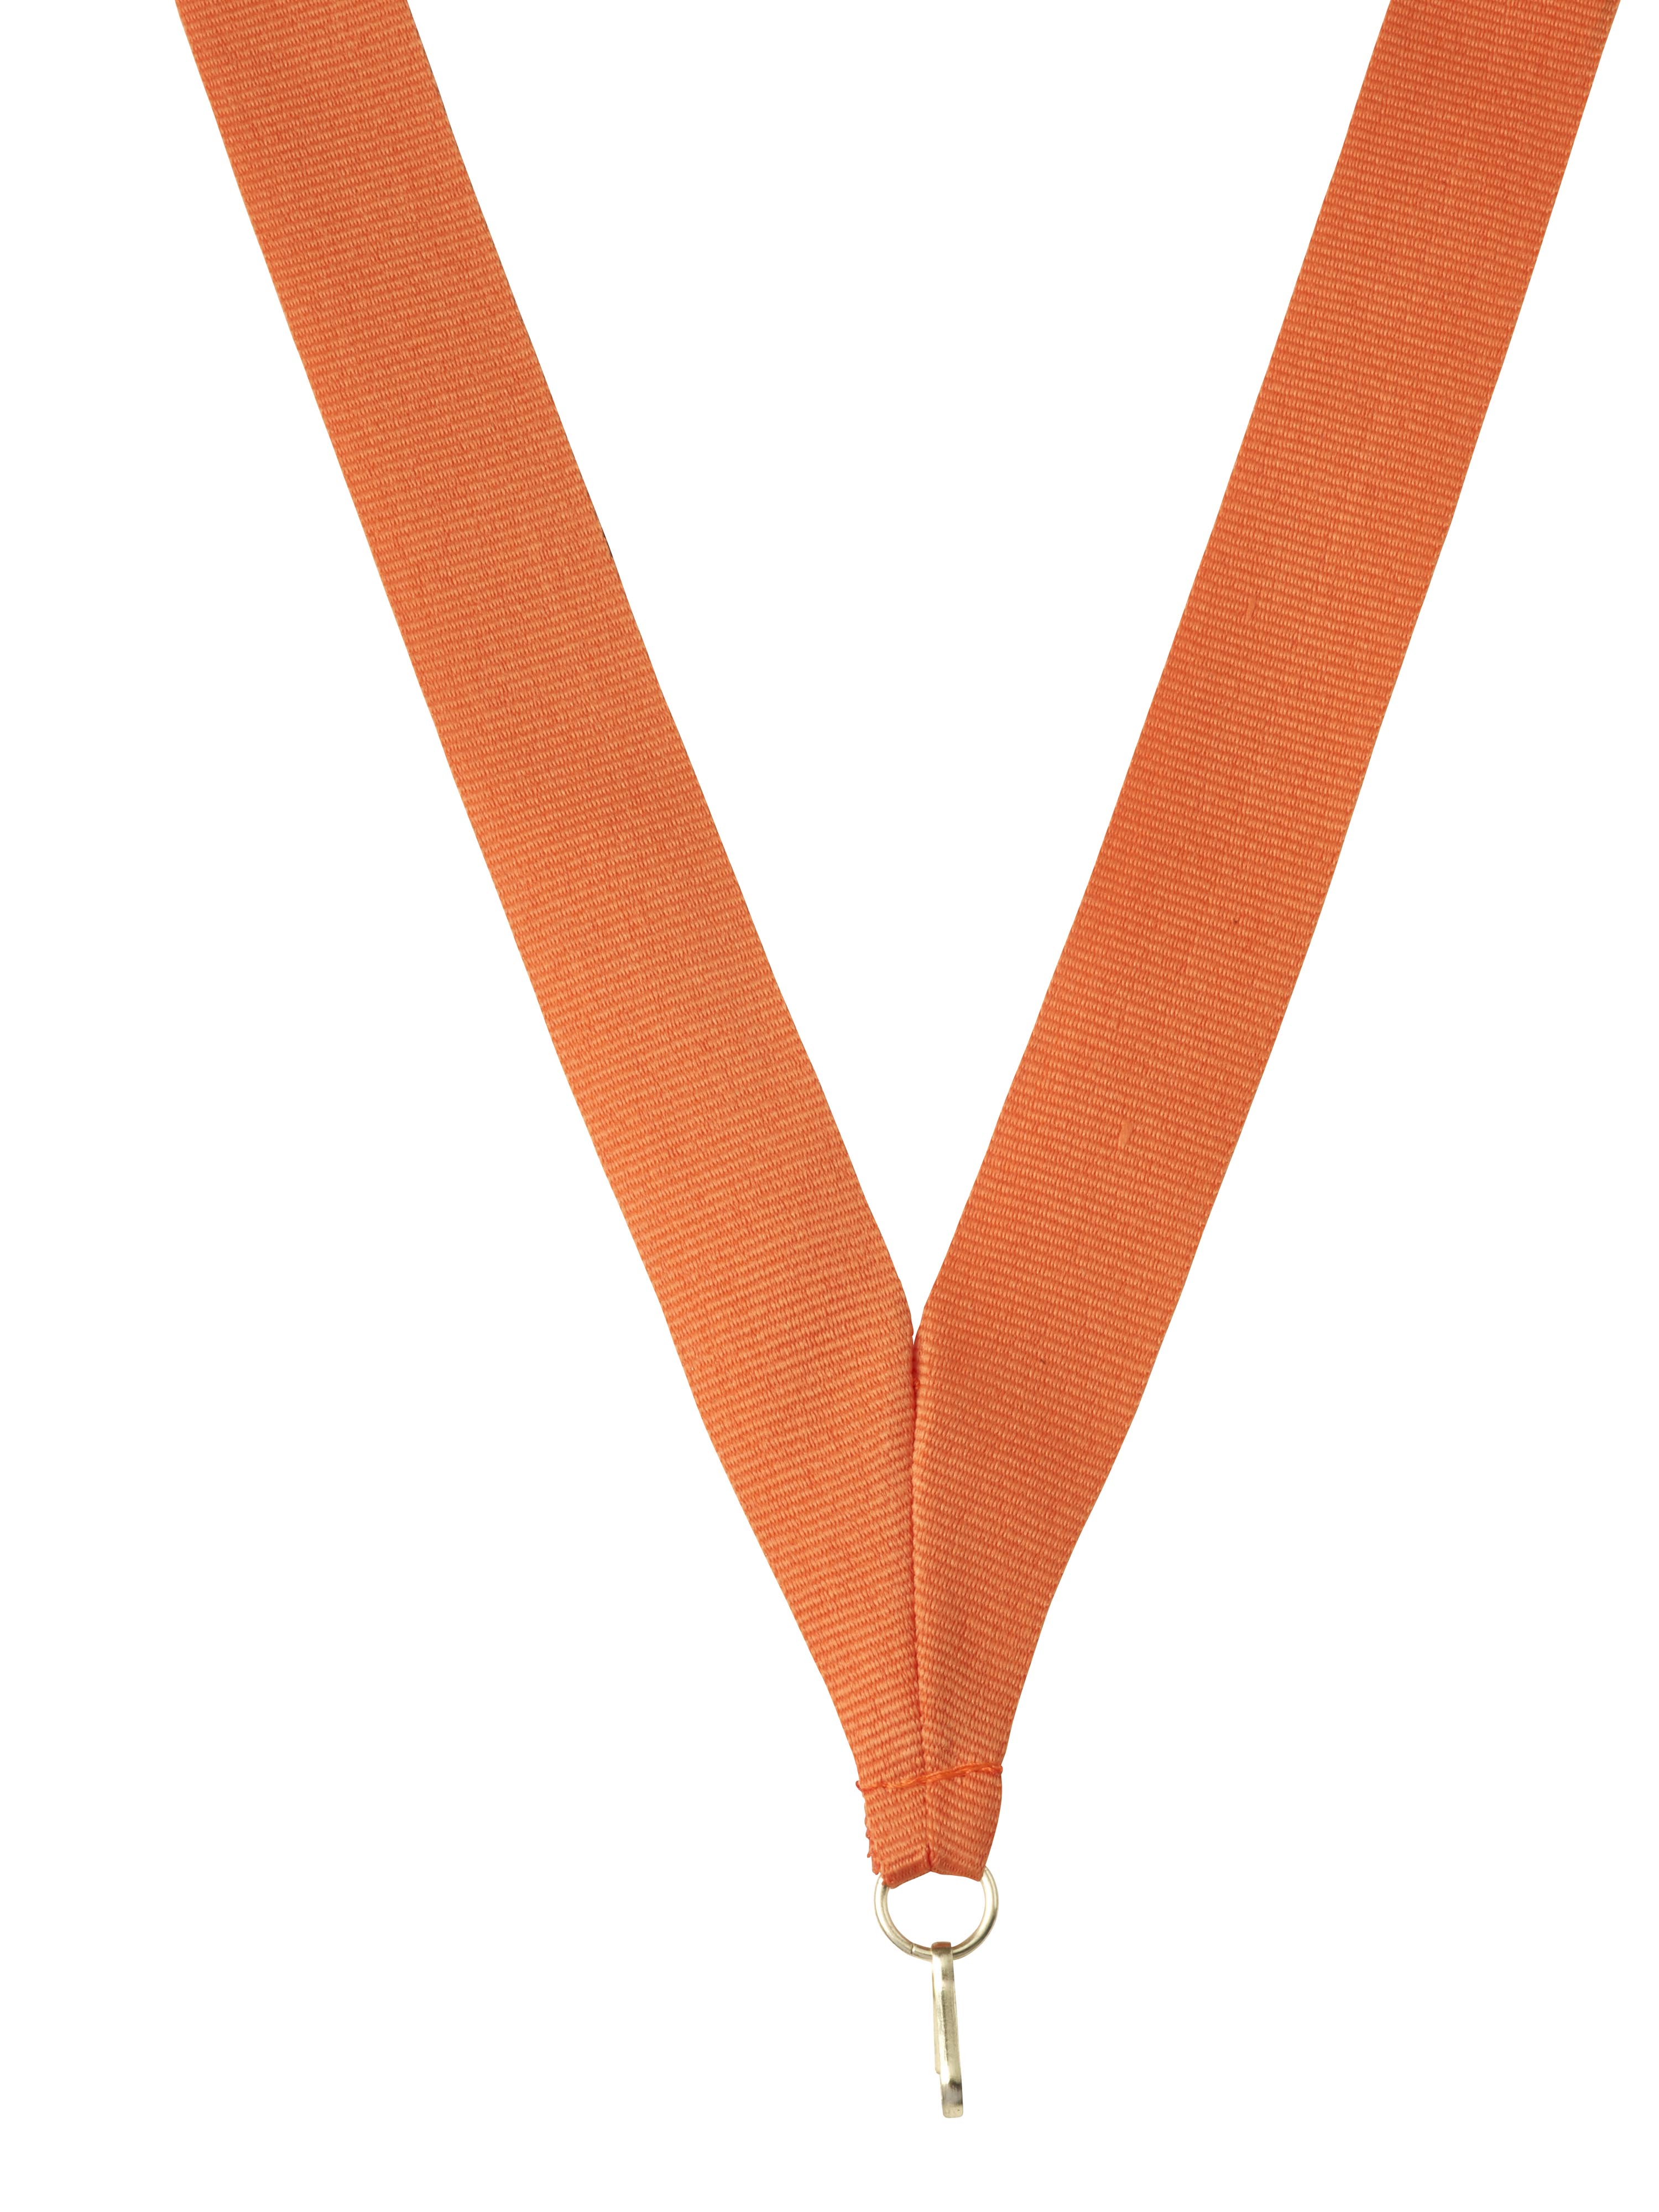 Medaillenband orange